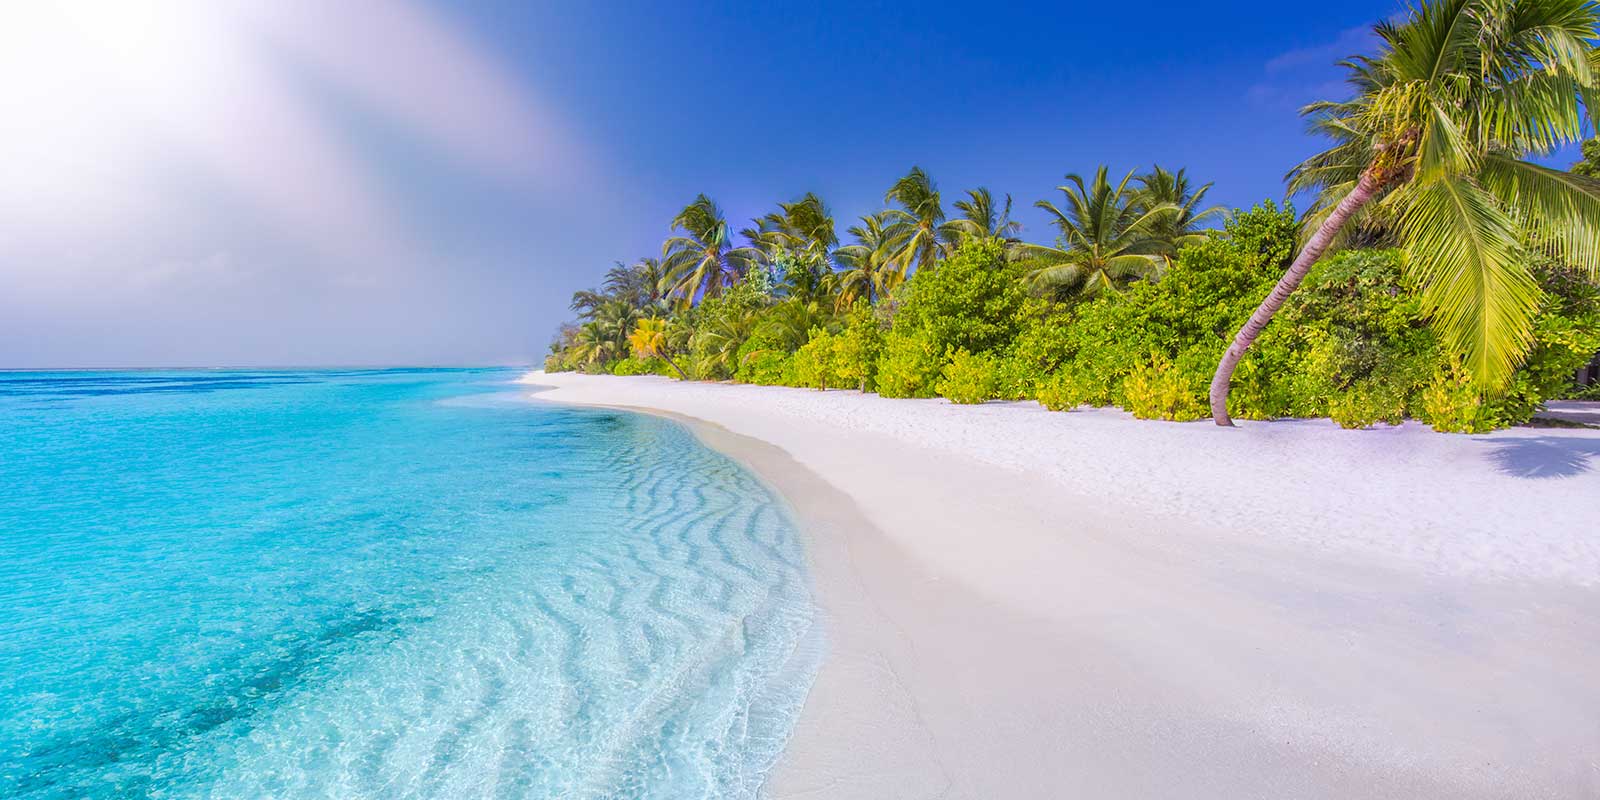 Tropical beach scene in the Maldives